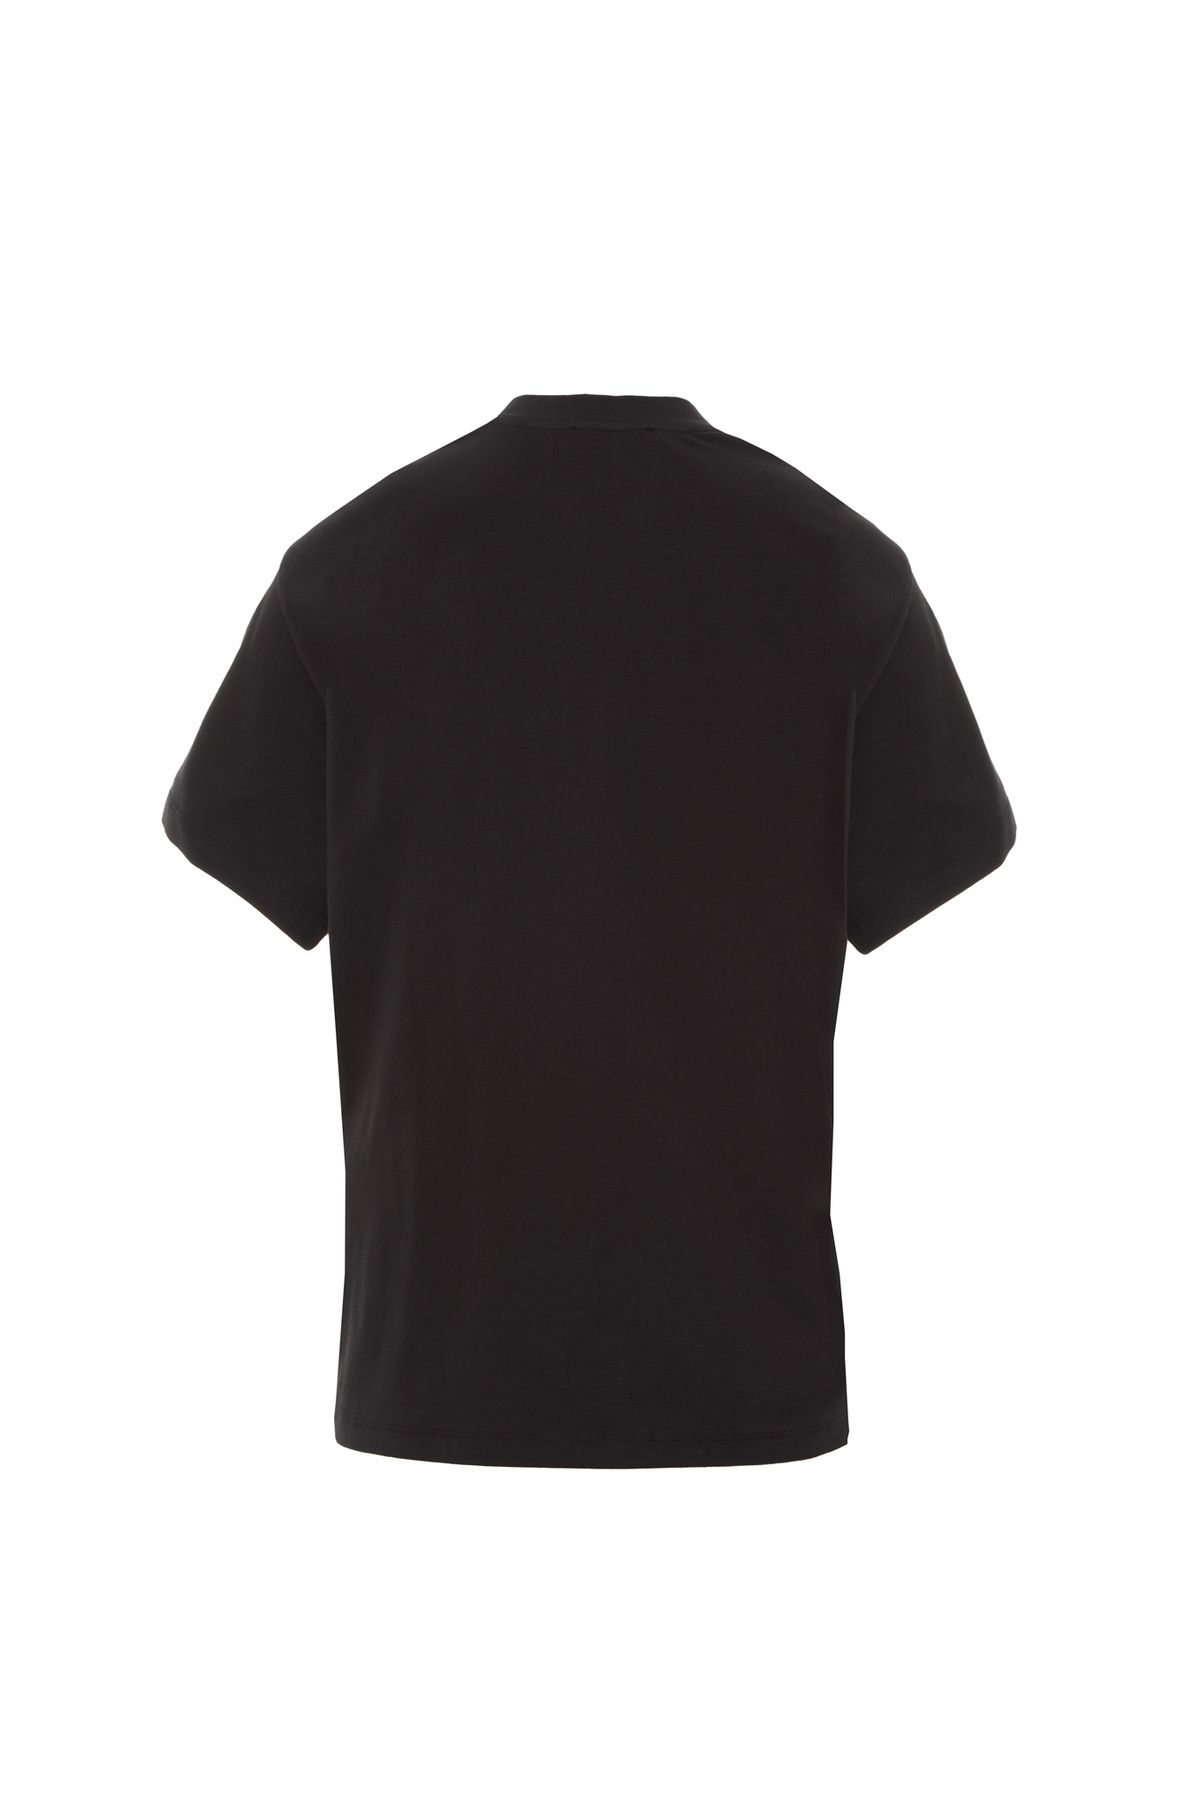 GIZIA تی شرت ساده مشکی با جزئیات گلدوزی کاربردی